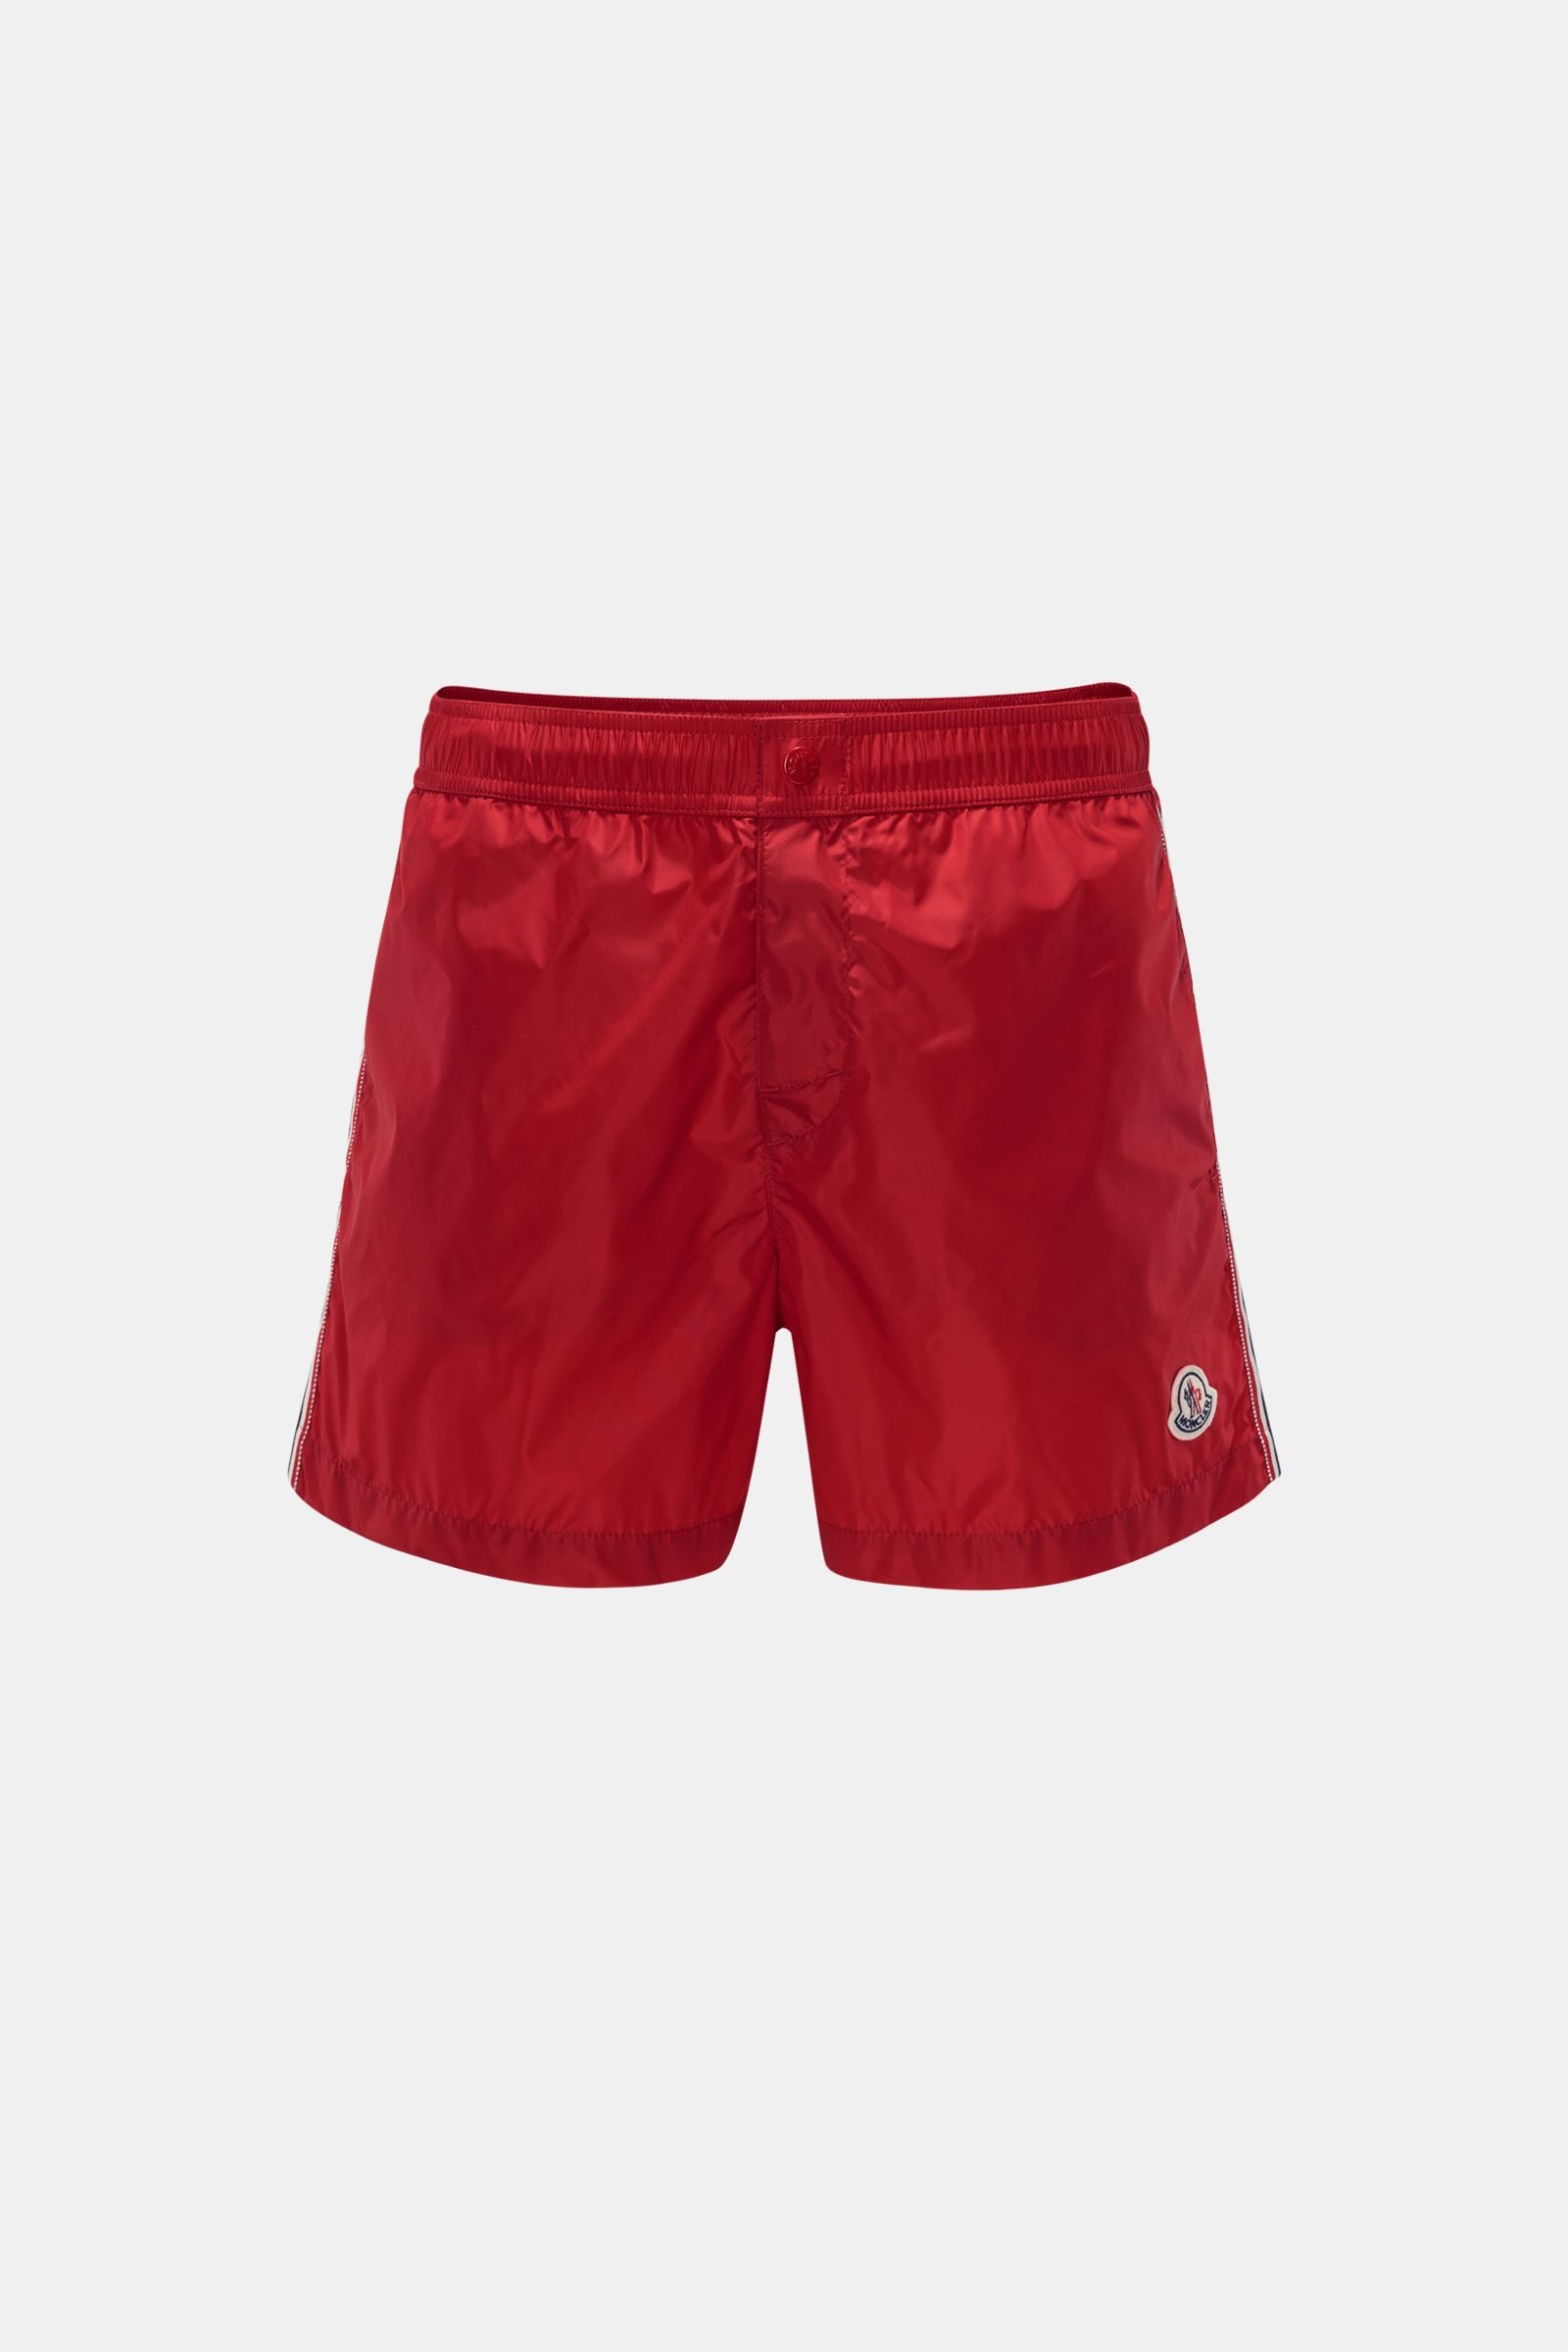 Swim shorts red 